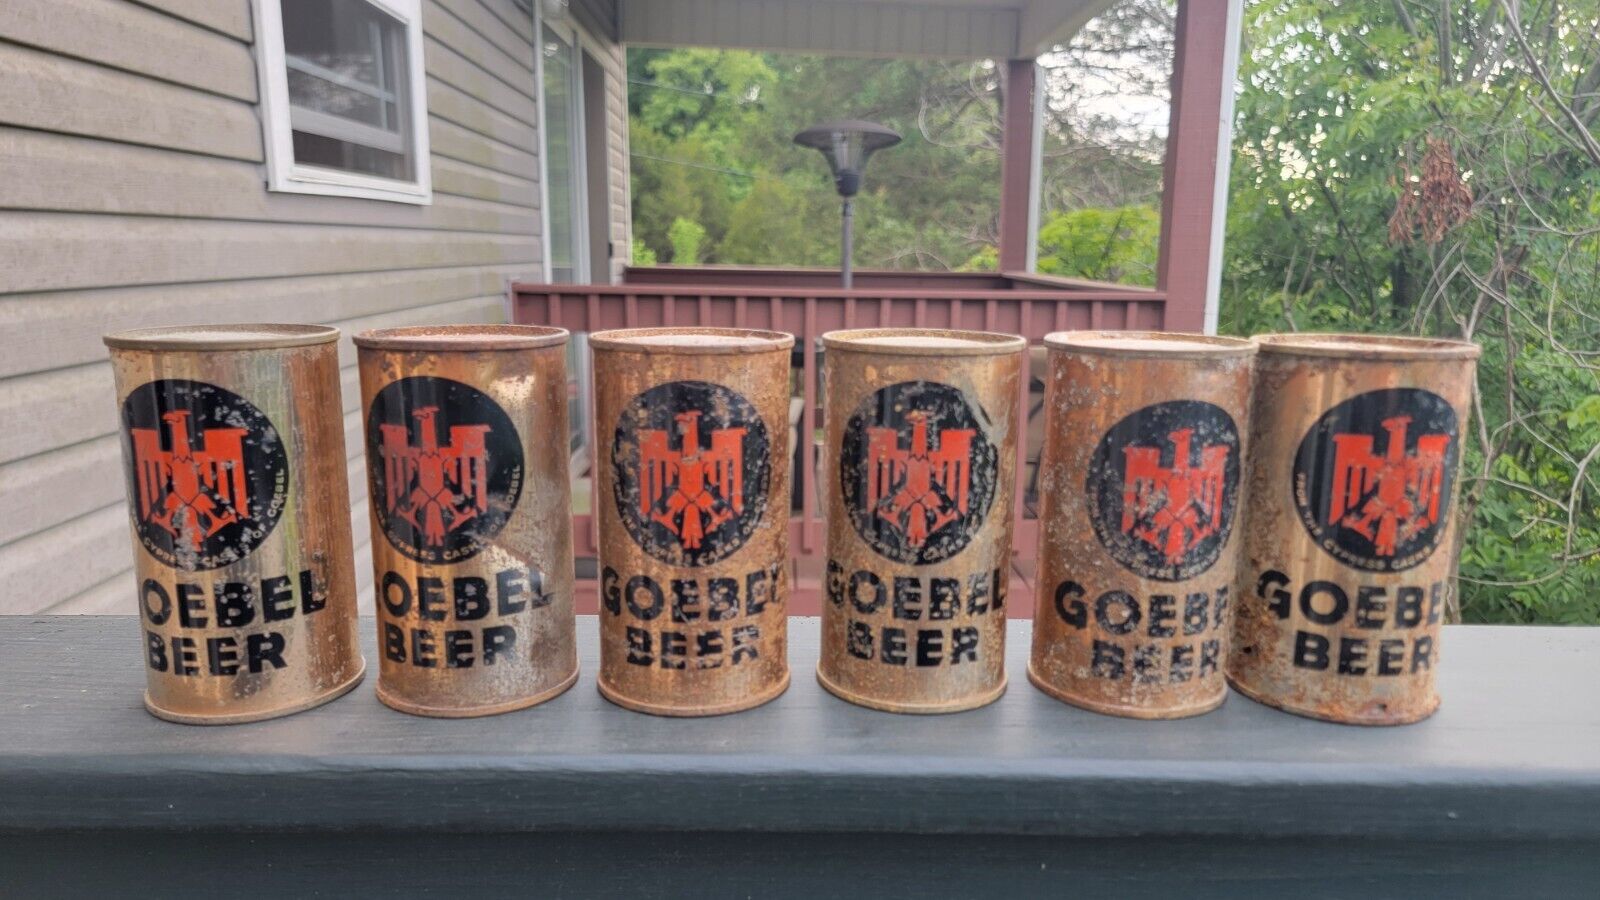 Goebel German Eagle 6 pack flat top beer cans oi